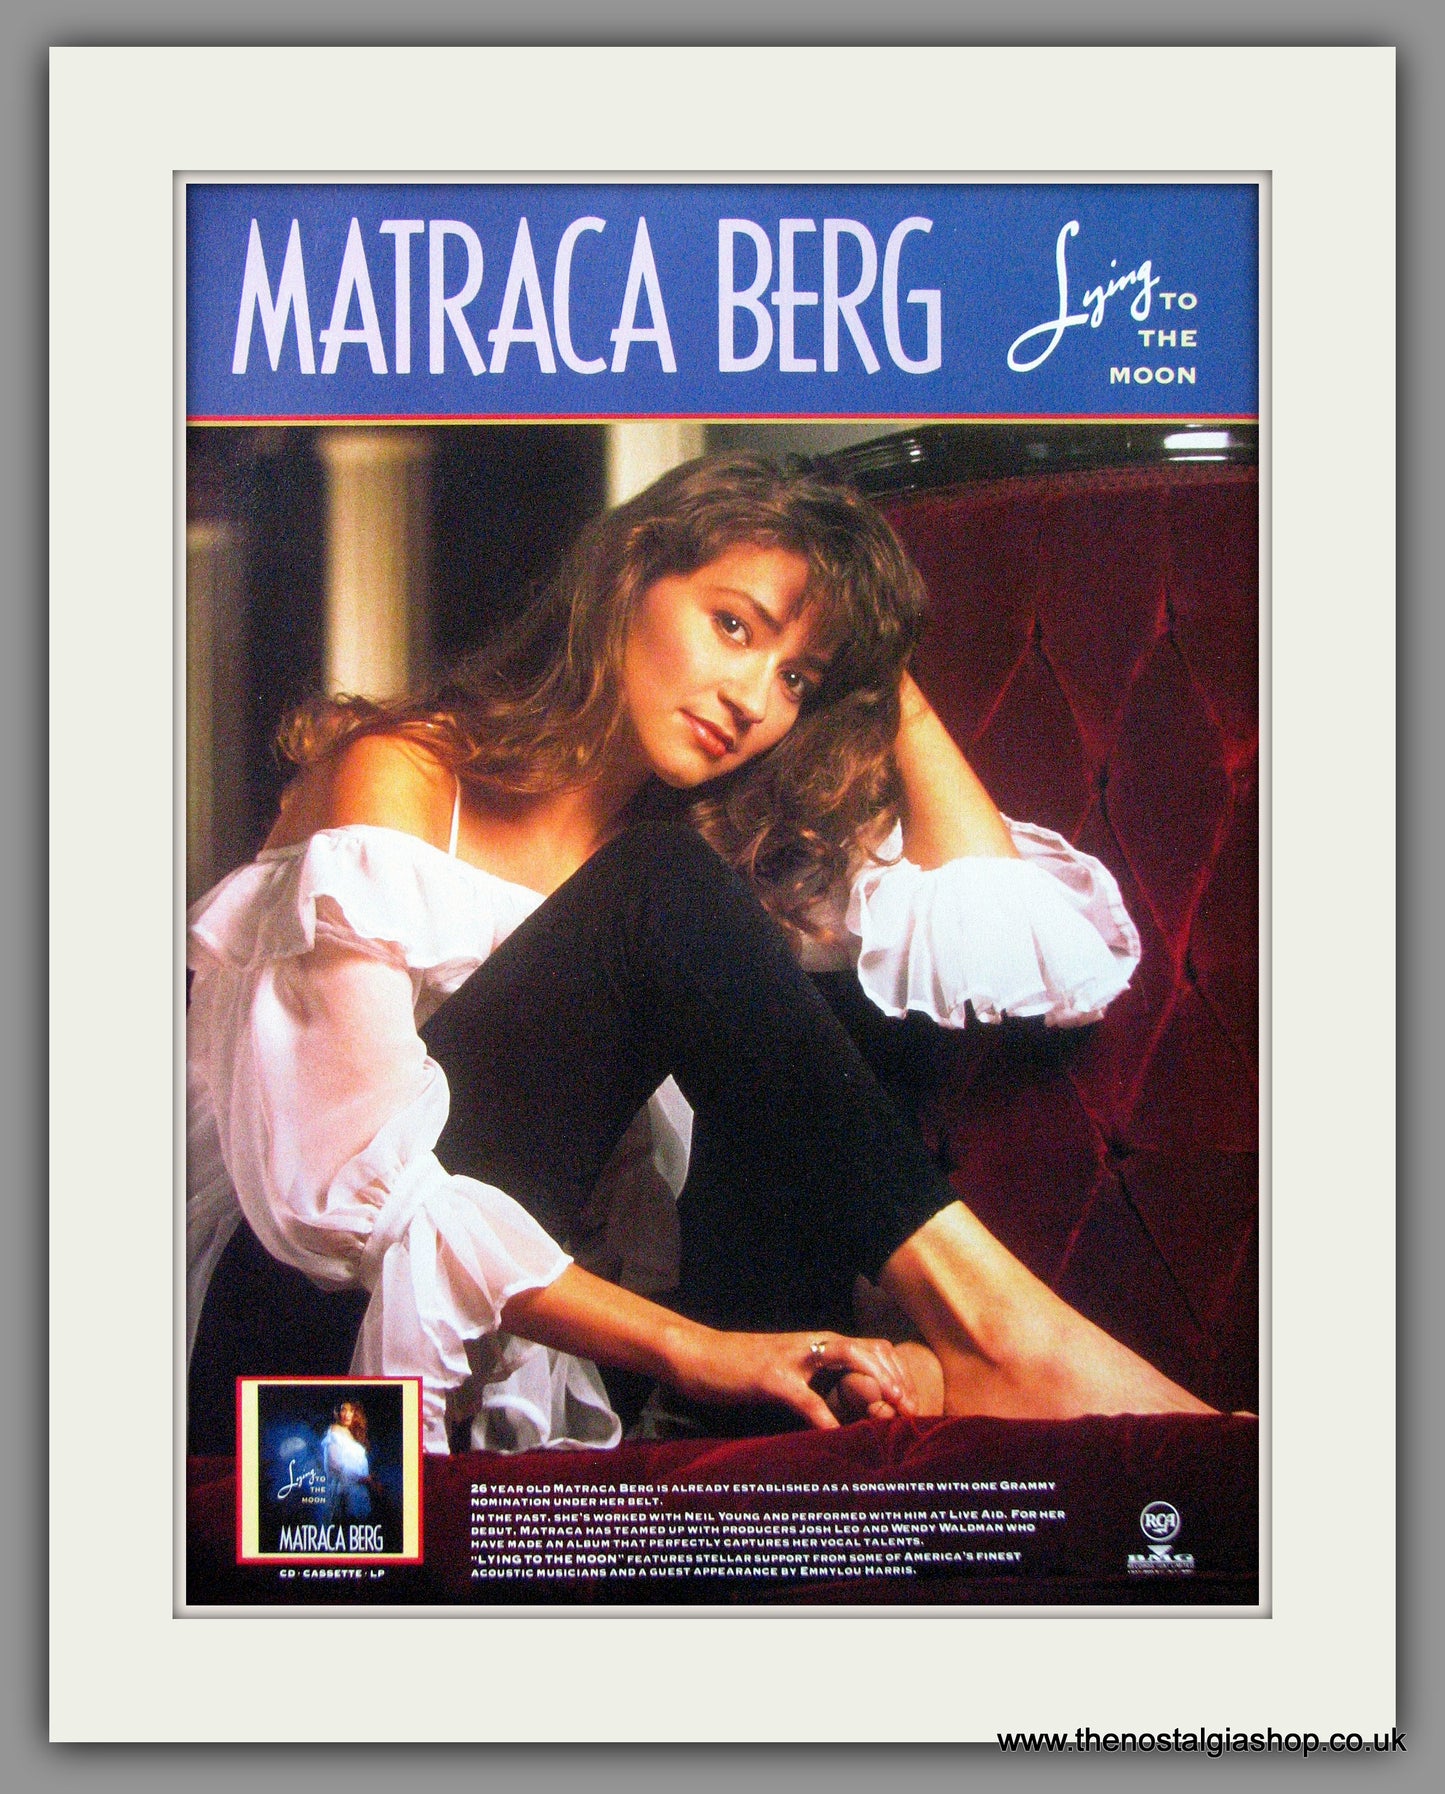 Matraca Berg. Lying To The Moon. 1990 Original Advert (ref AD54108)